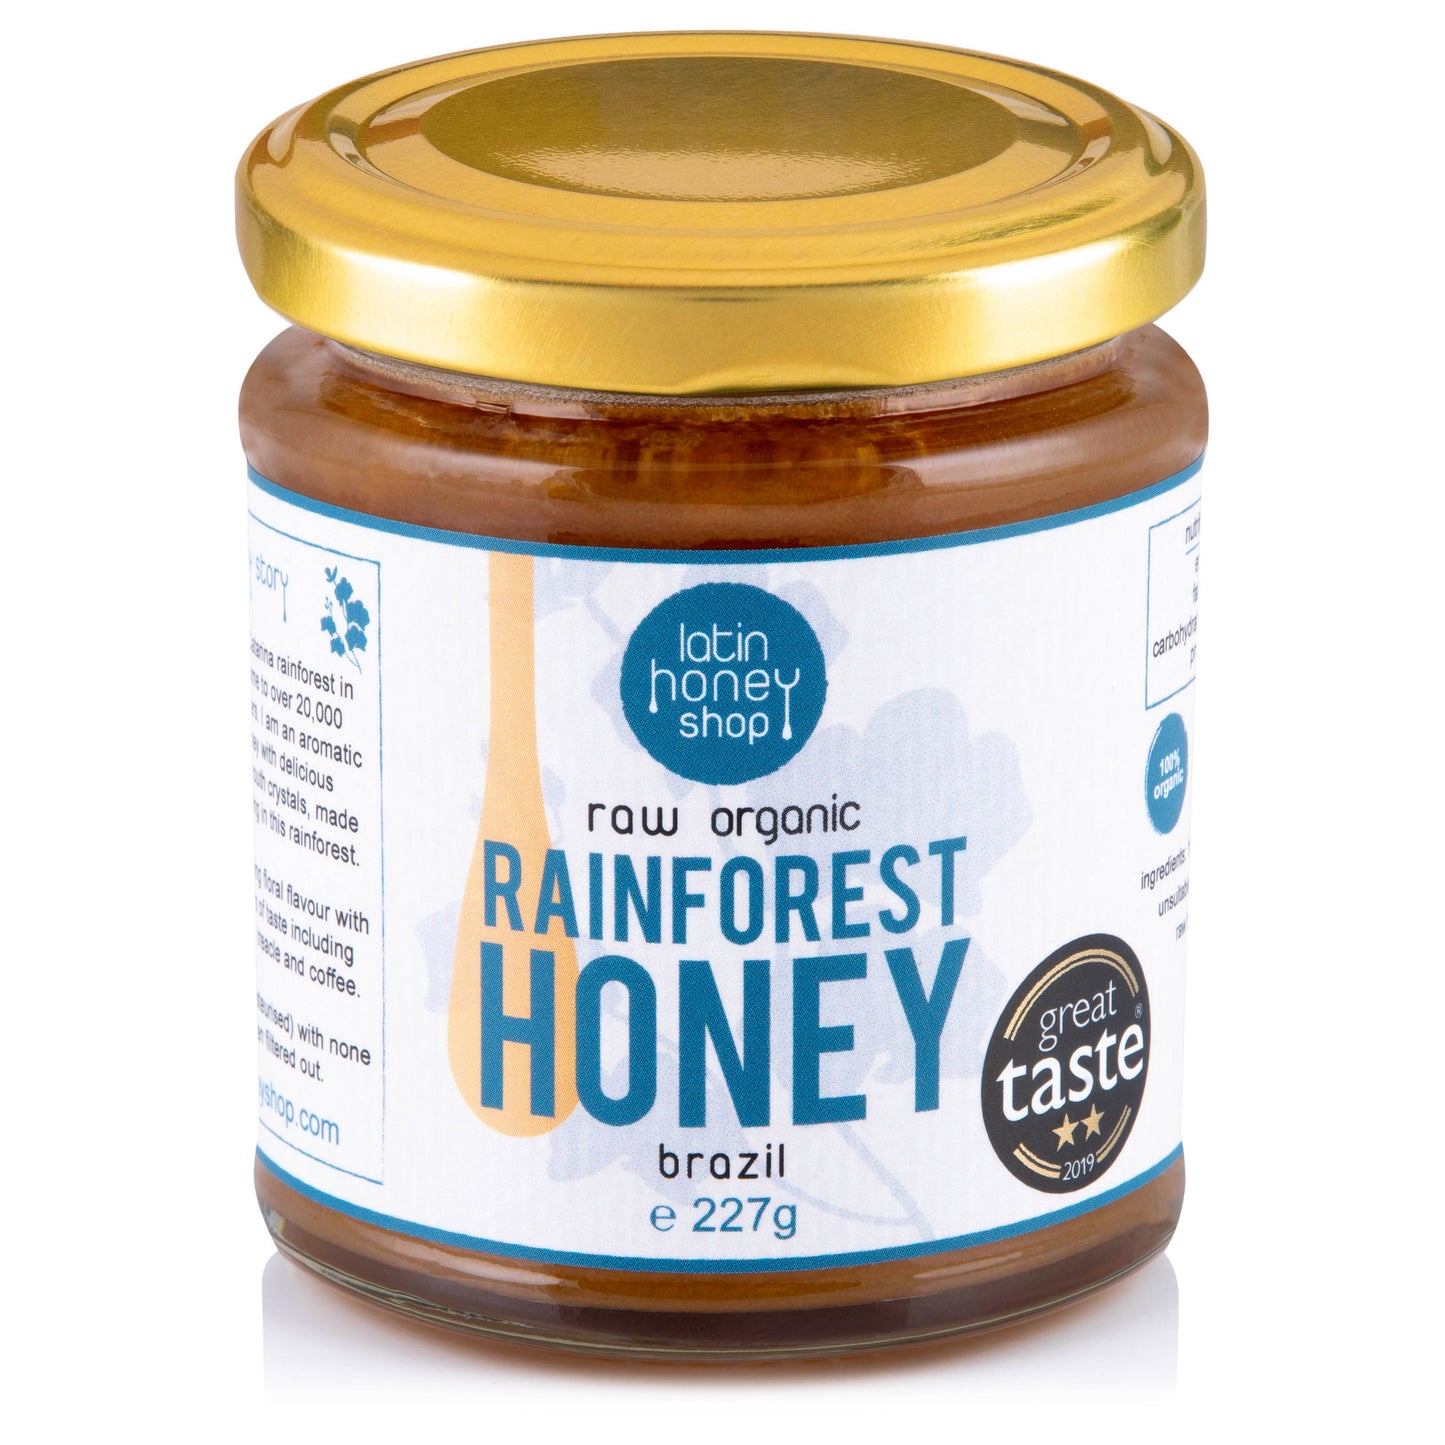 Raw Organic Rainforest Honey From Brazil 227g